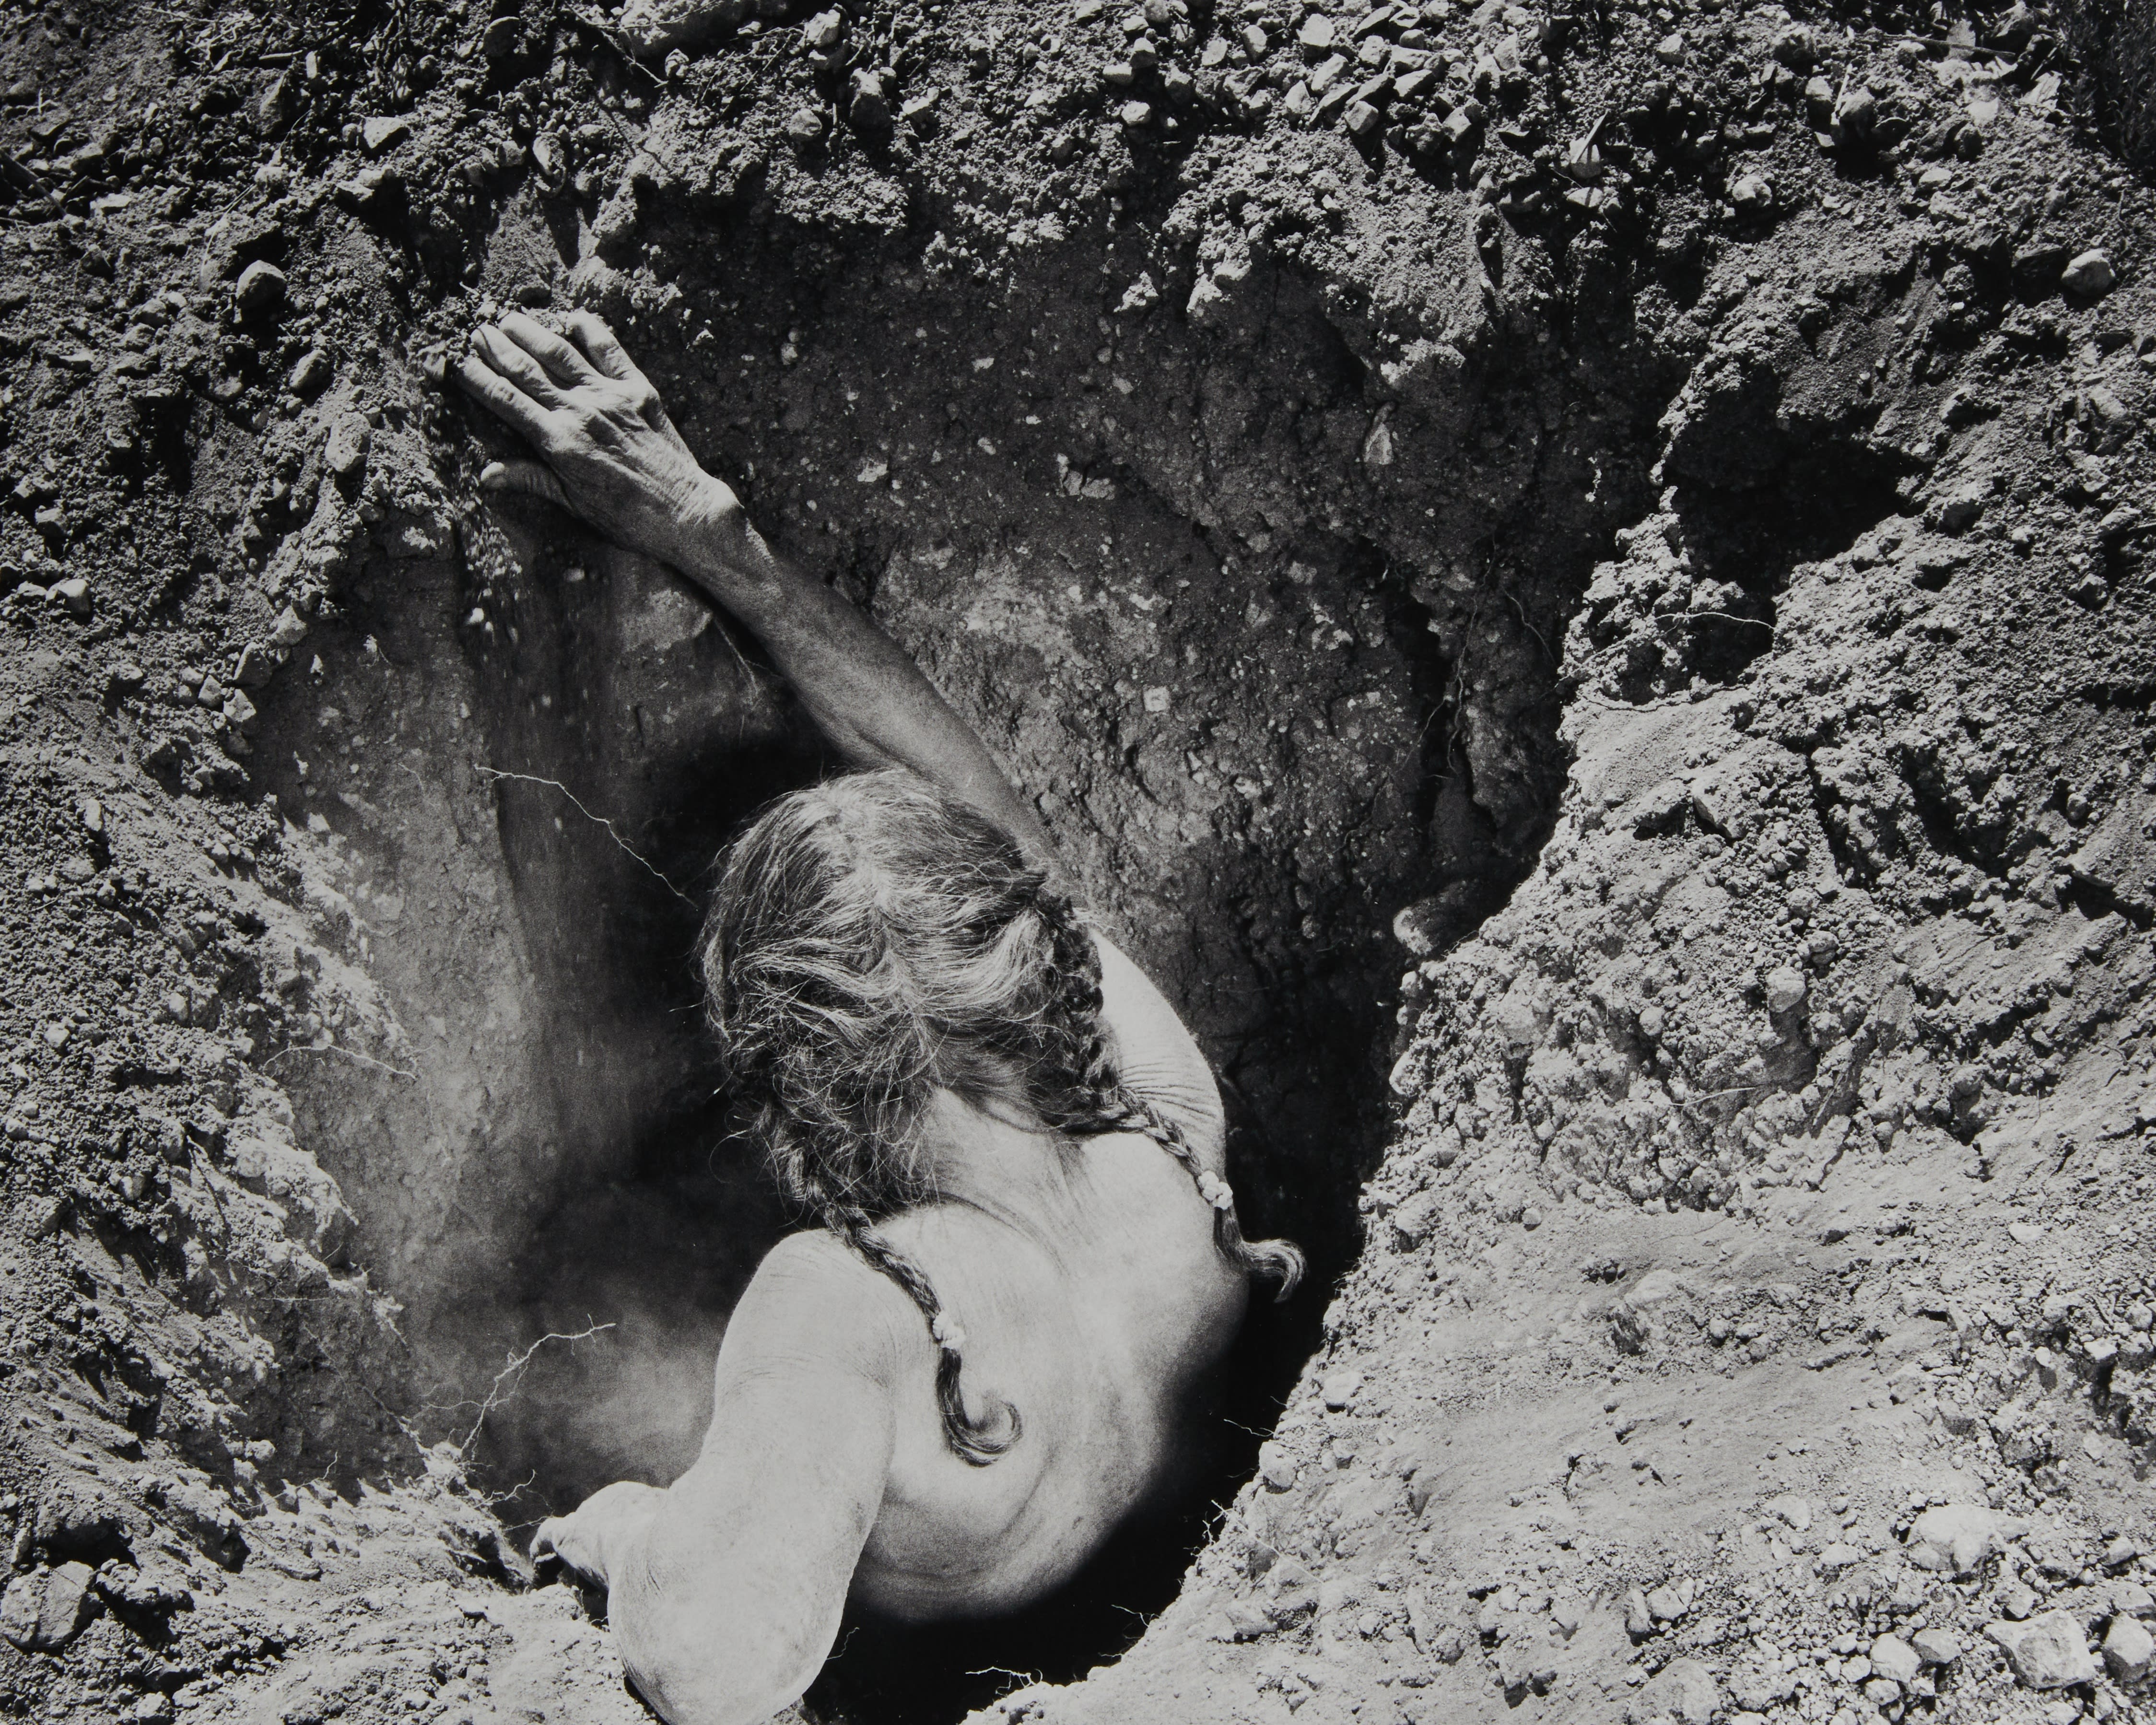 Woman crawling into hole